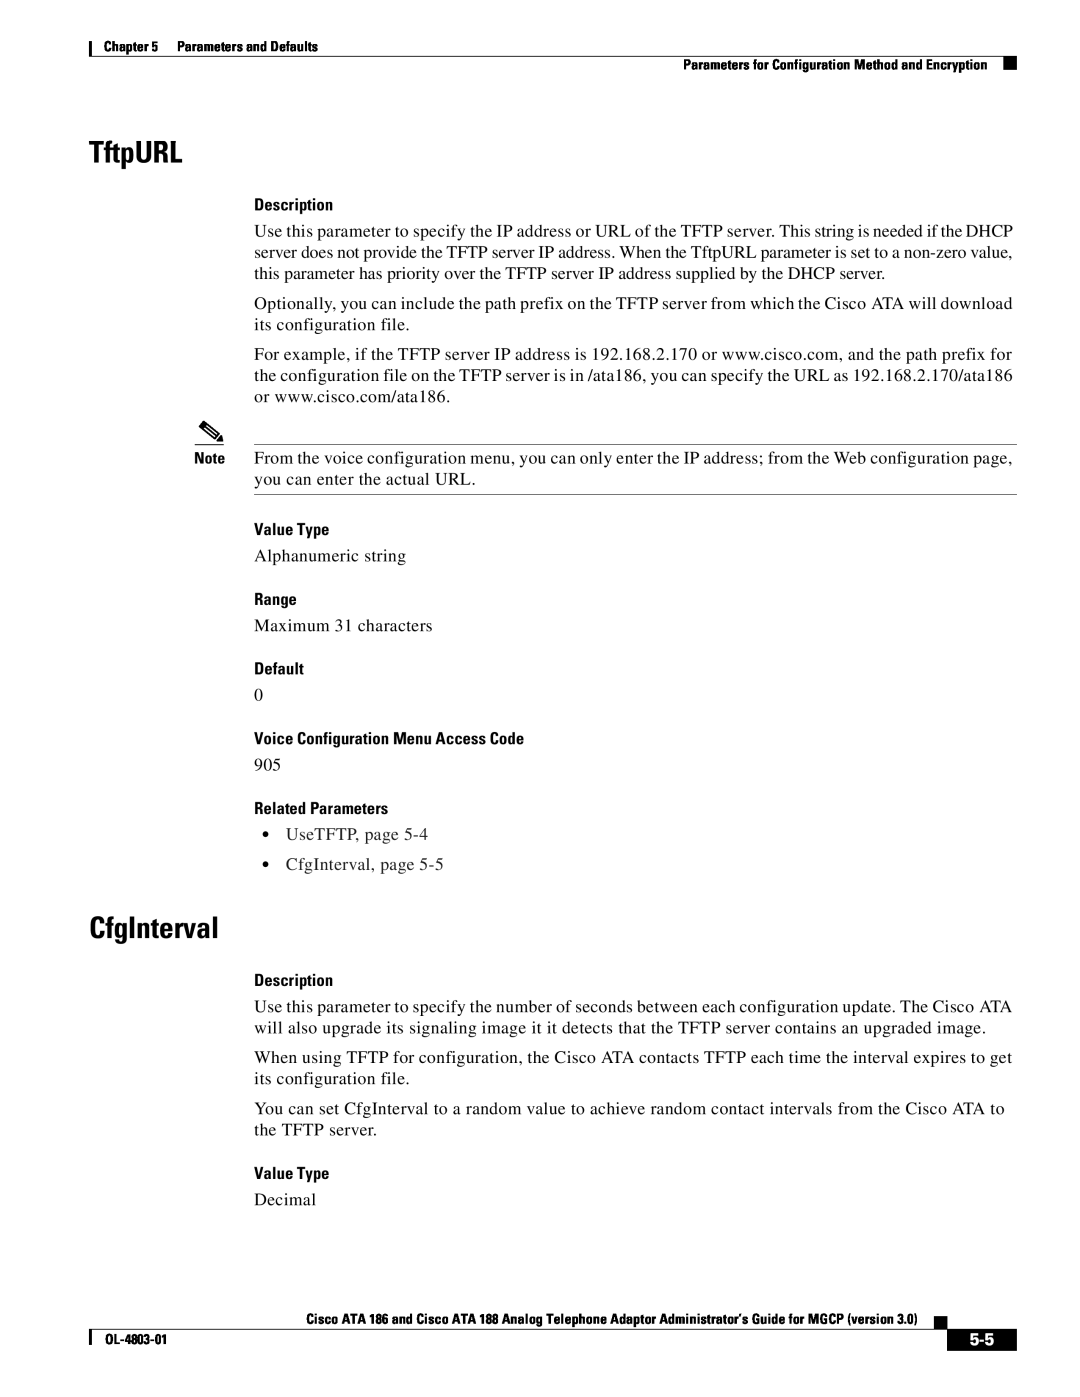 Cisco Systems ATA 186 manual TftpURL, UseTFTP, page CfgInterval, page, Description, Value Type, Range, Default 